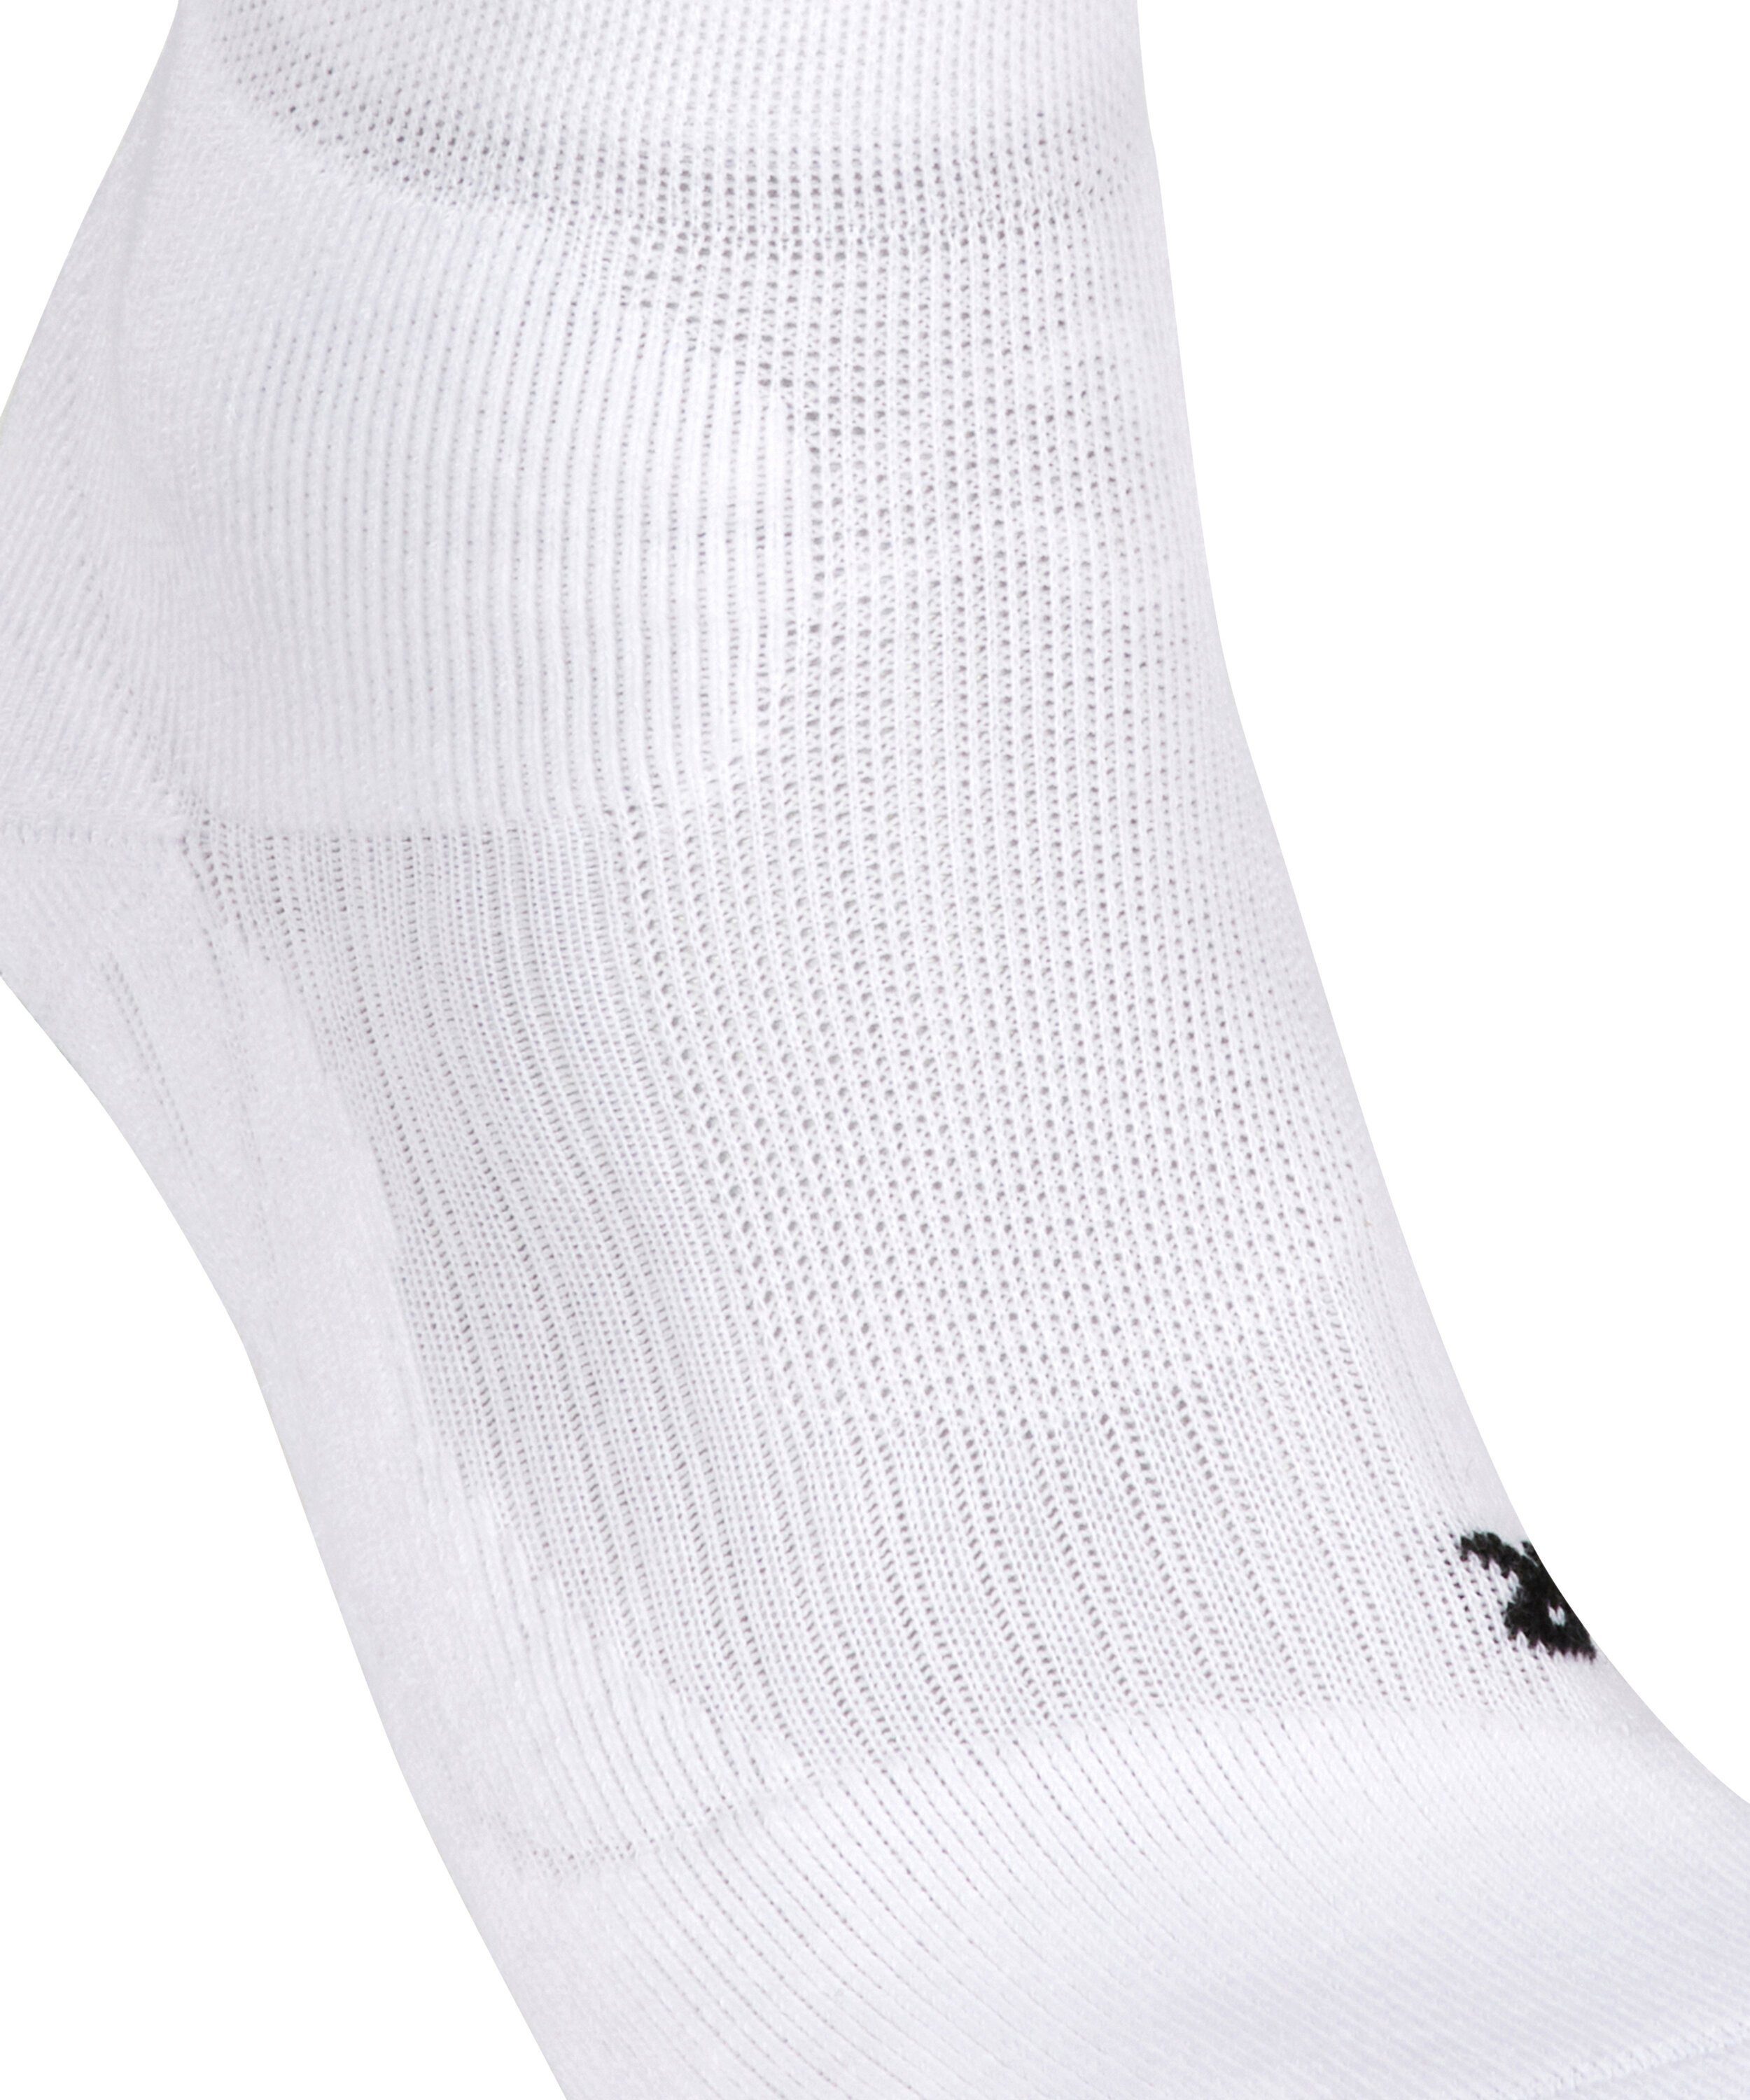 Stabilisierende Hartplätze TE2 FALKE für Socken white (2000) (1-Paar) Tennissocken Short